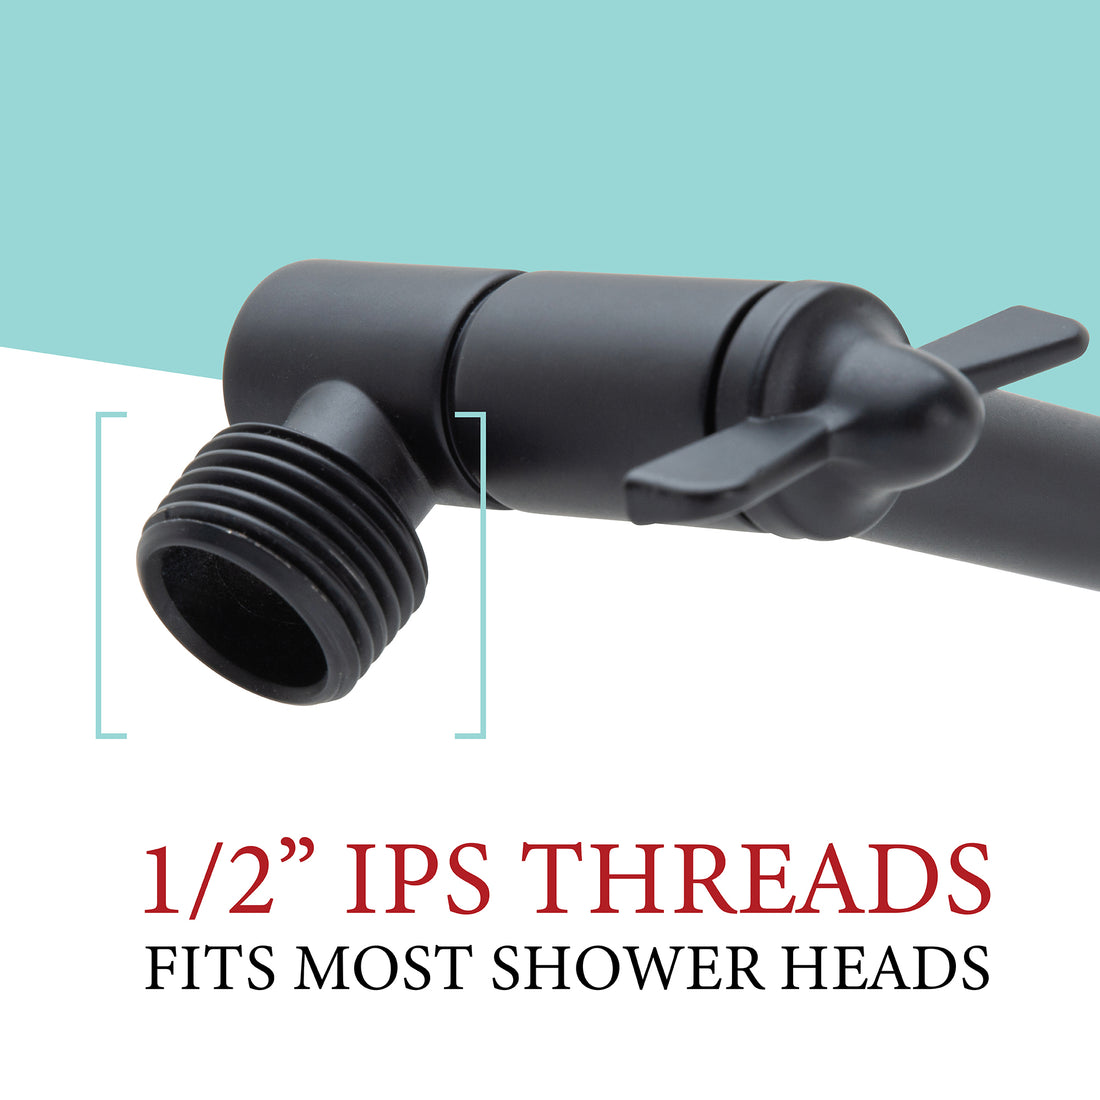 10 in. Solid Brass Shower Head Extension Arm with Flange (Black Finish) - Utility sinks vanites Tehila